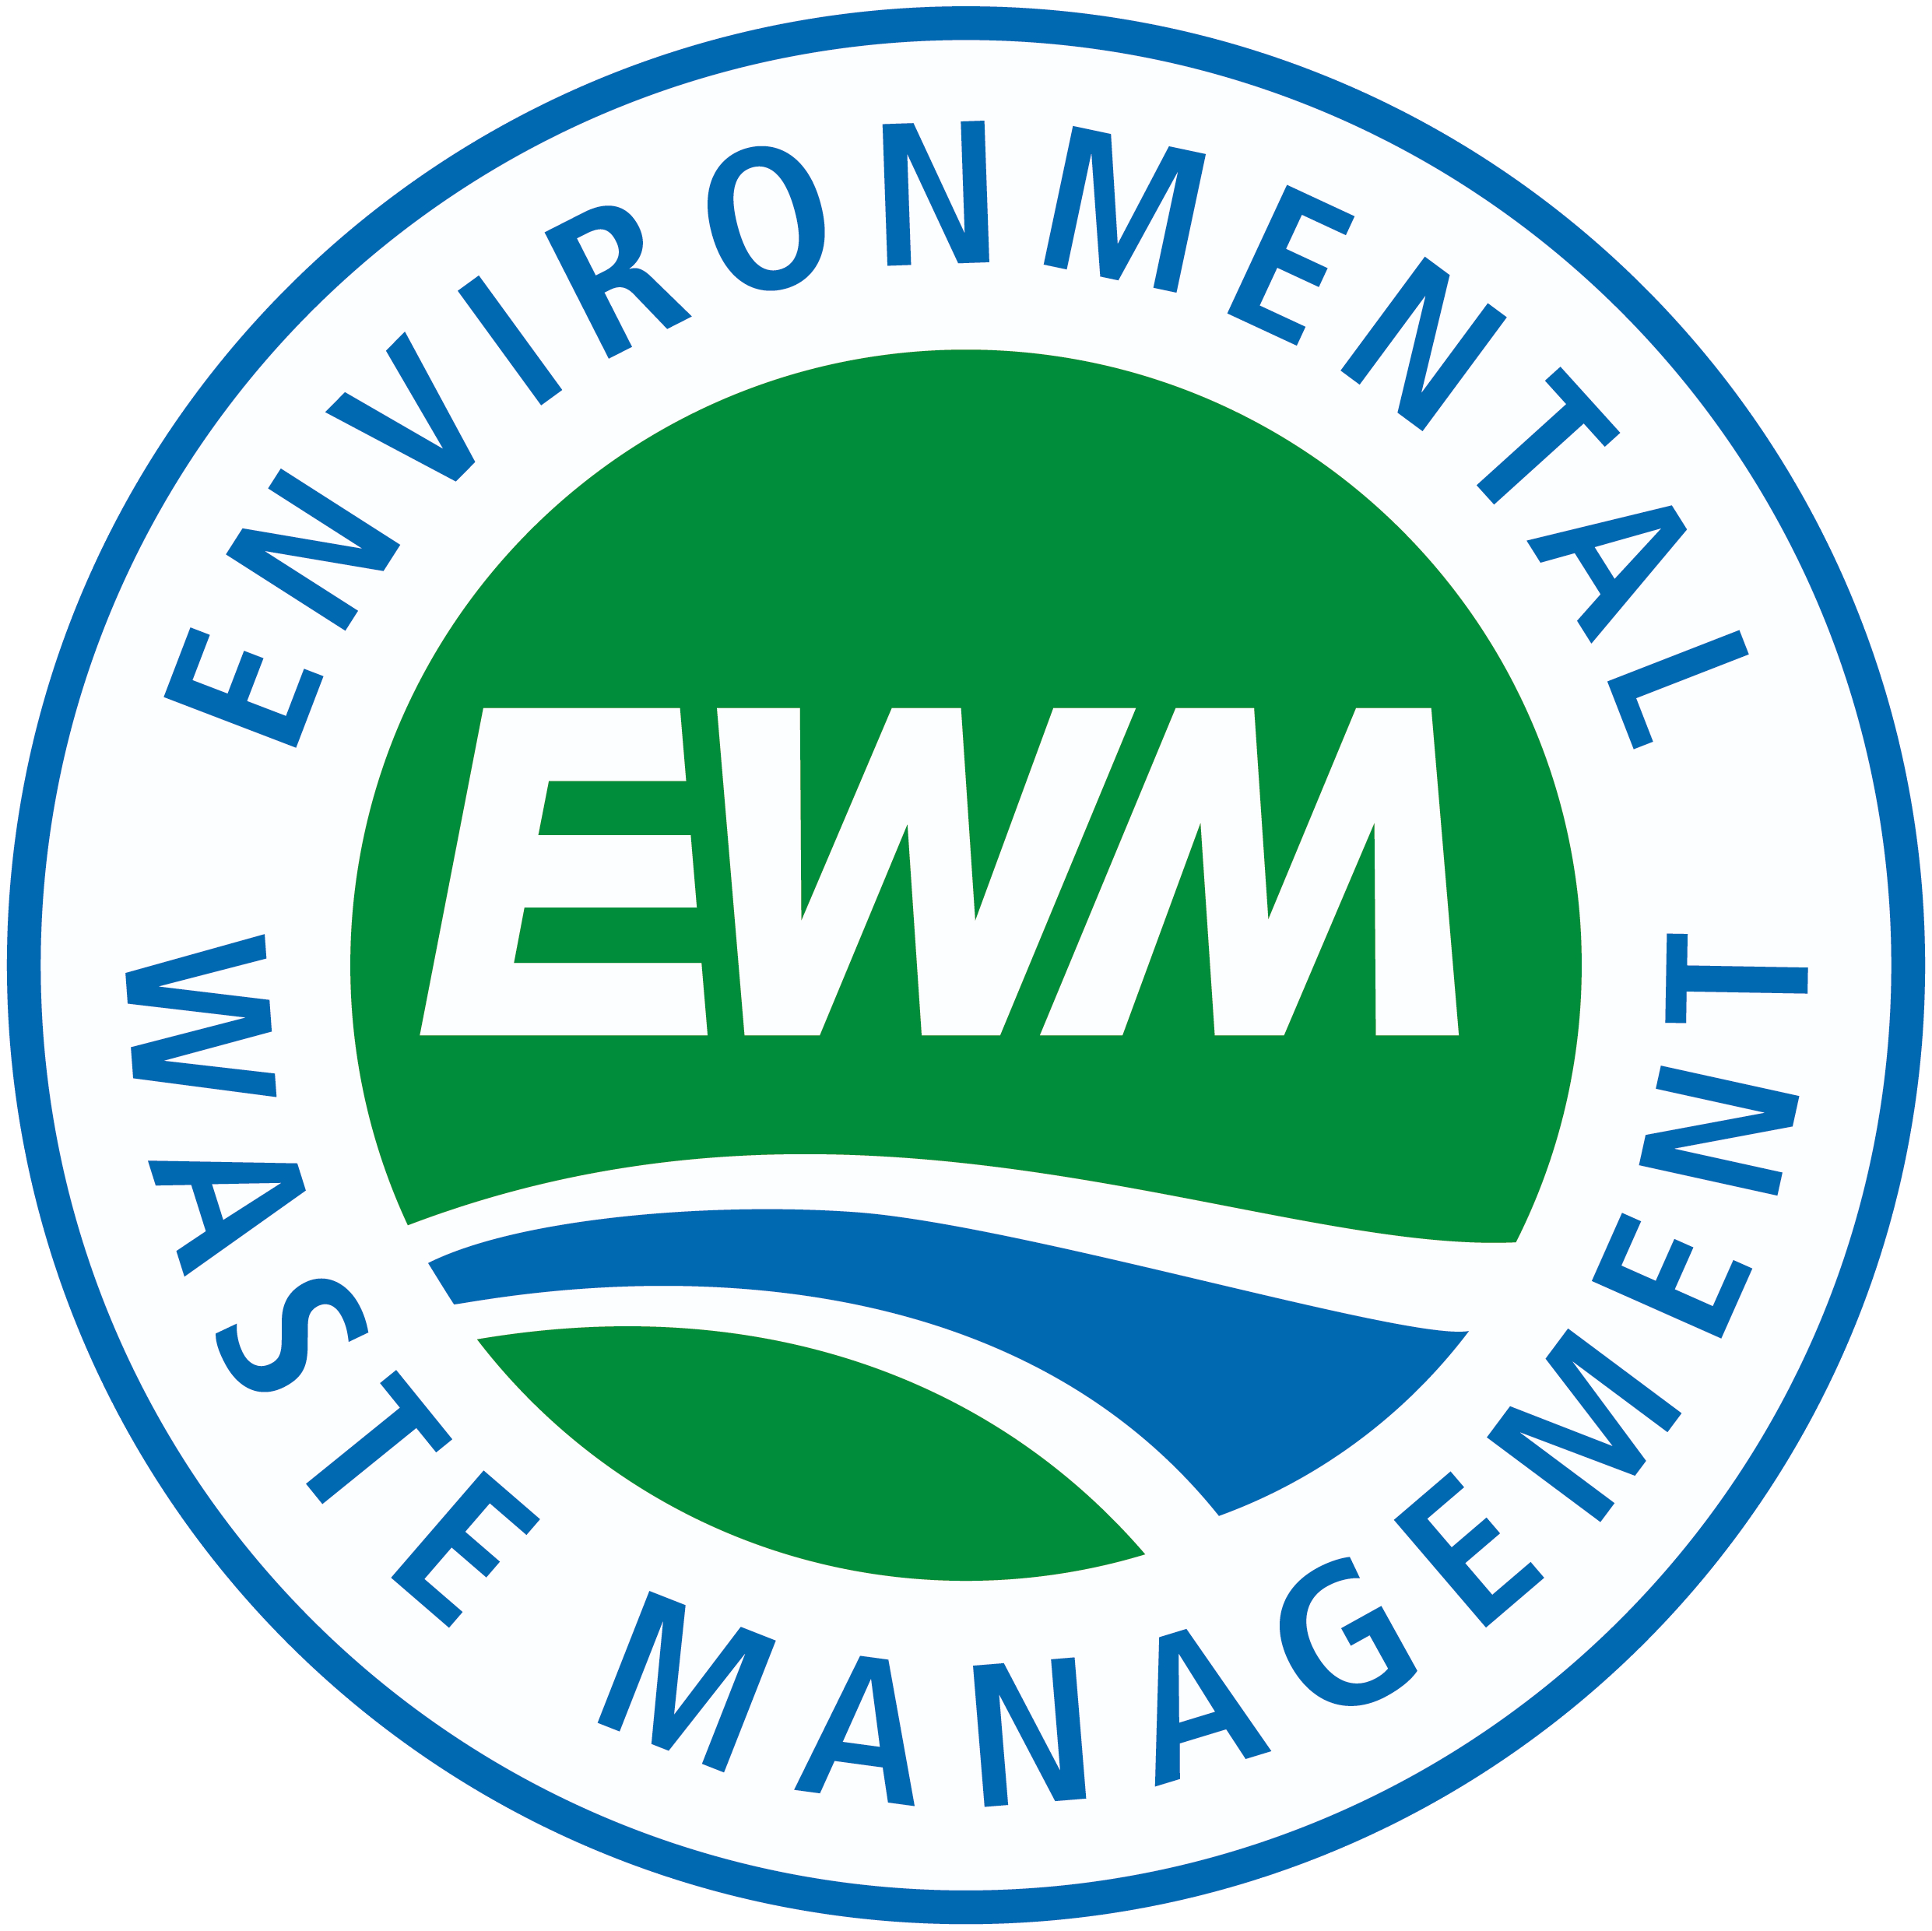 Environmental Waste Management Ltd